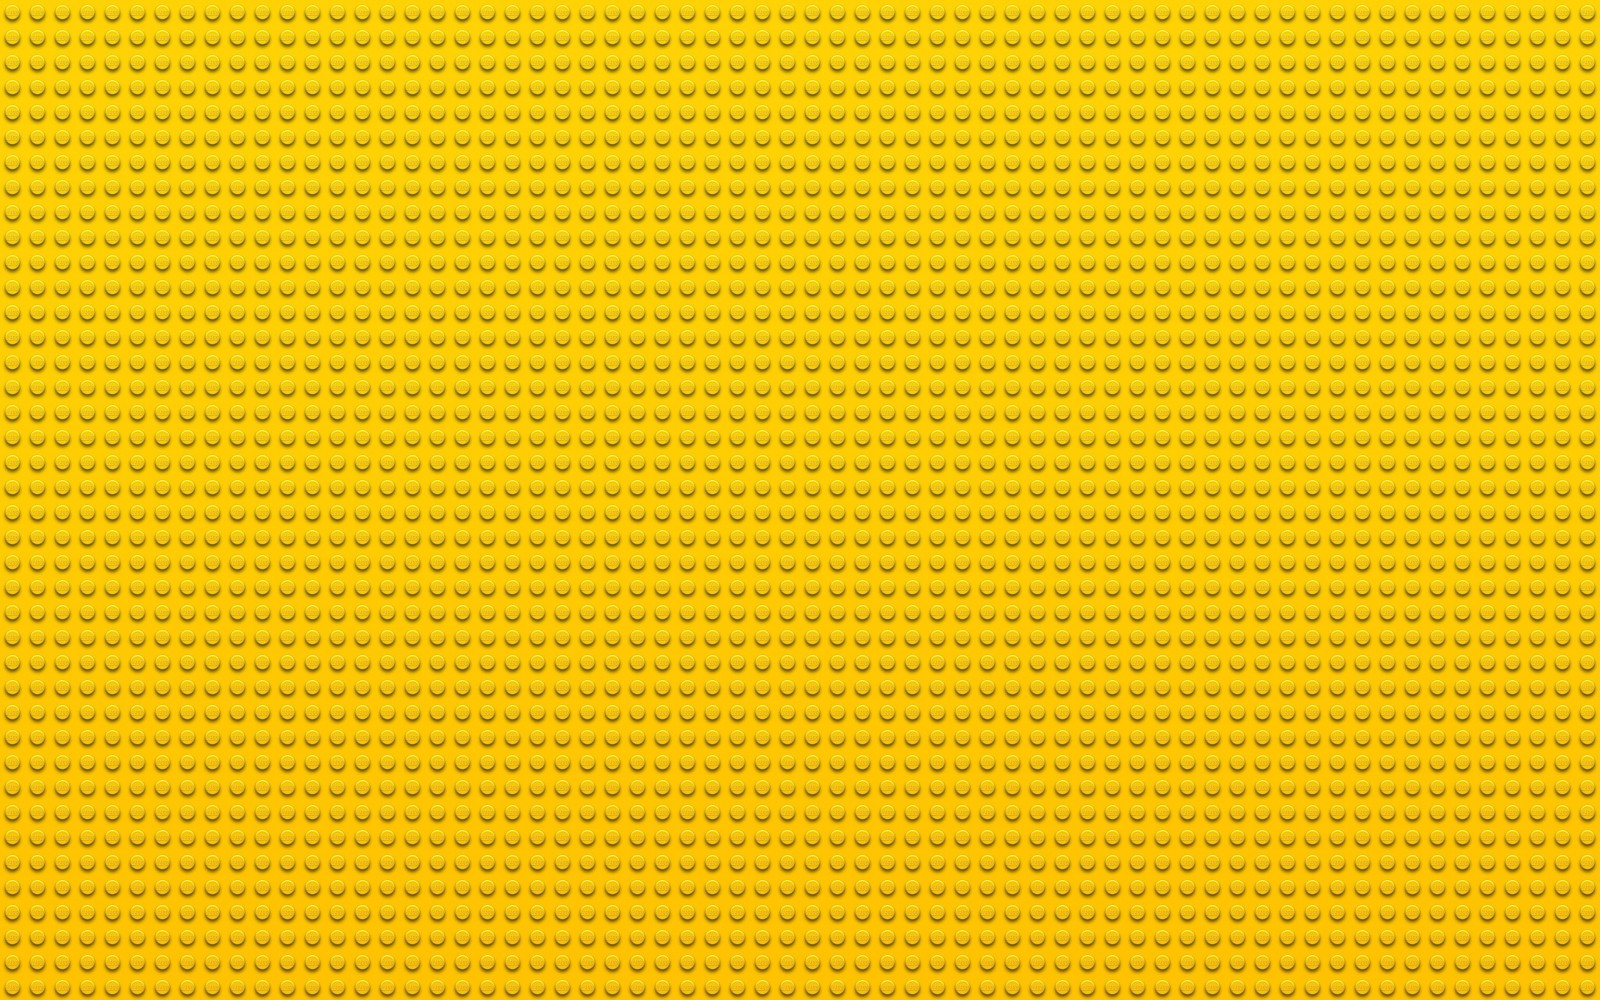 lego_points_circles_yellow-773251.jpg!d.jpg